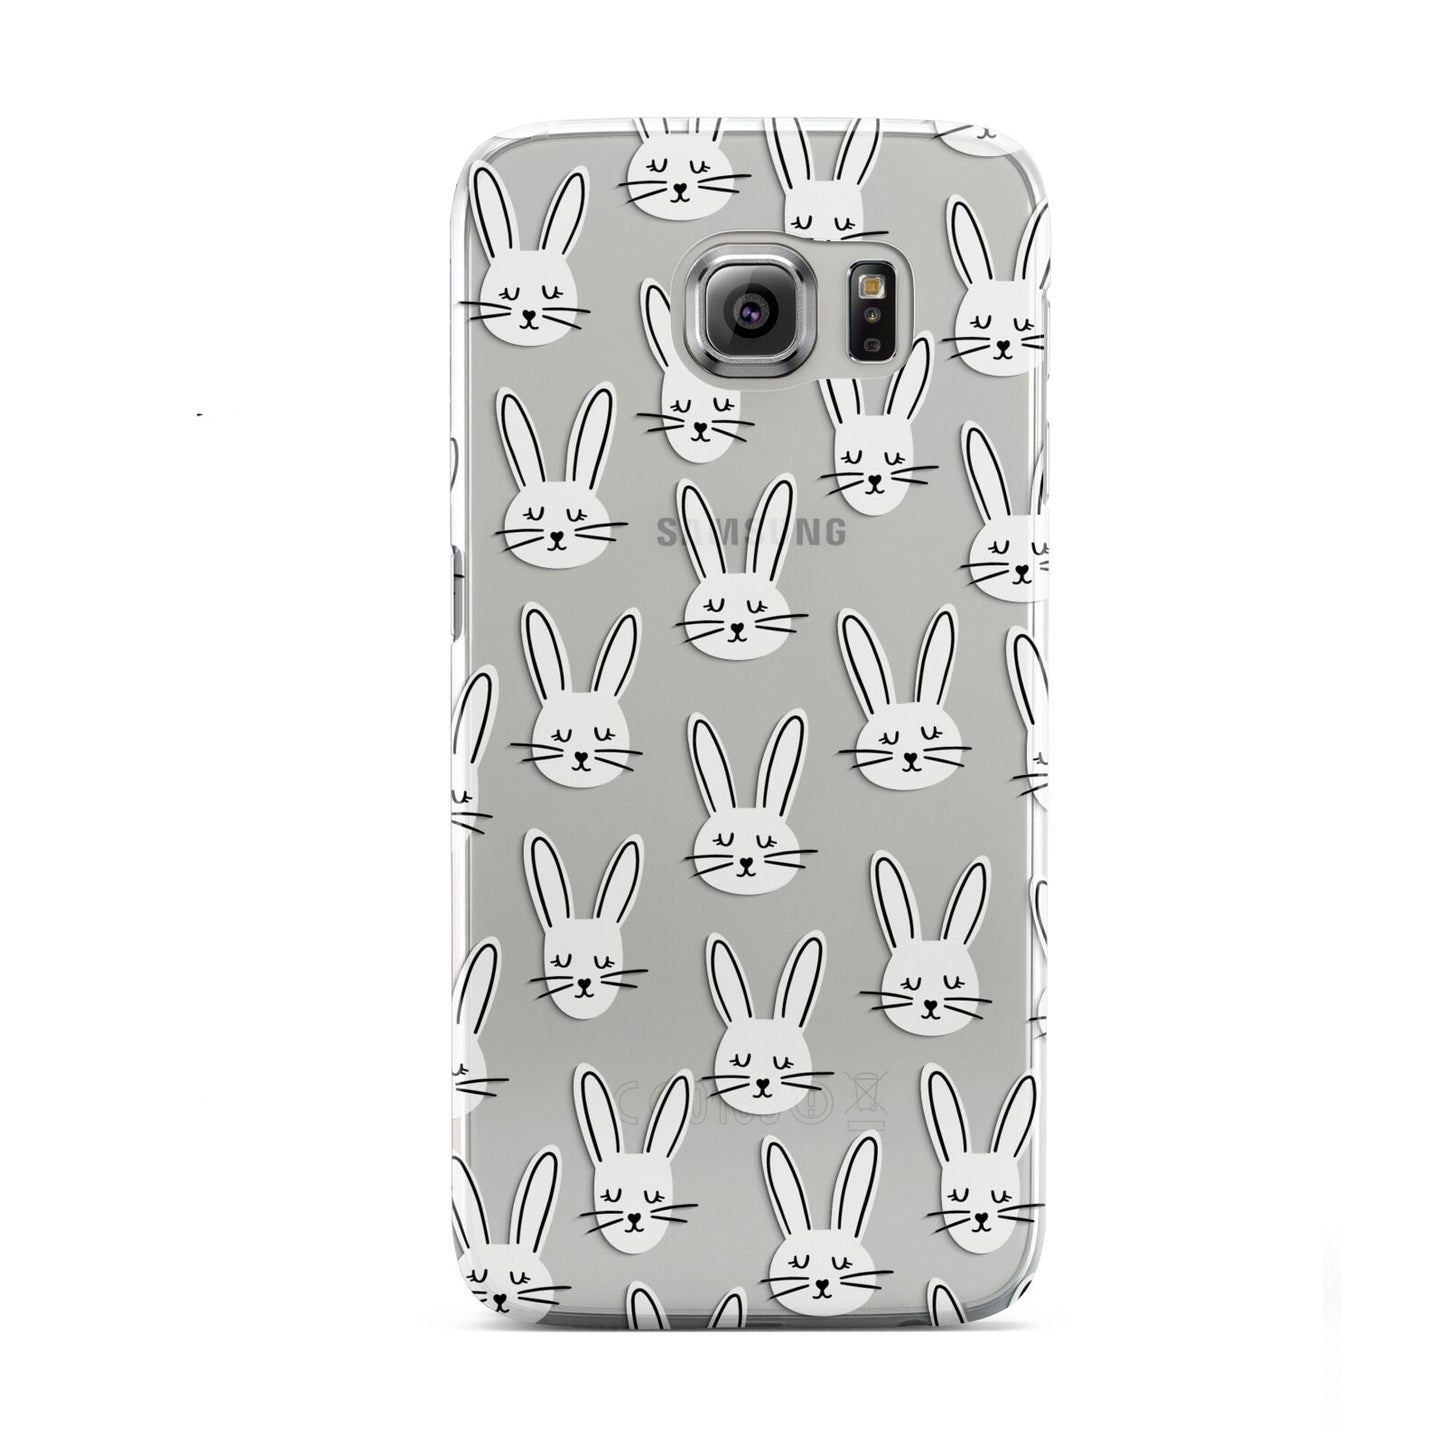 Easter Bunny Samsung Galaxy S6 Case